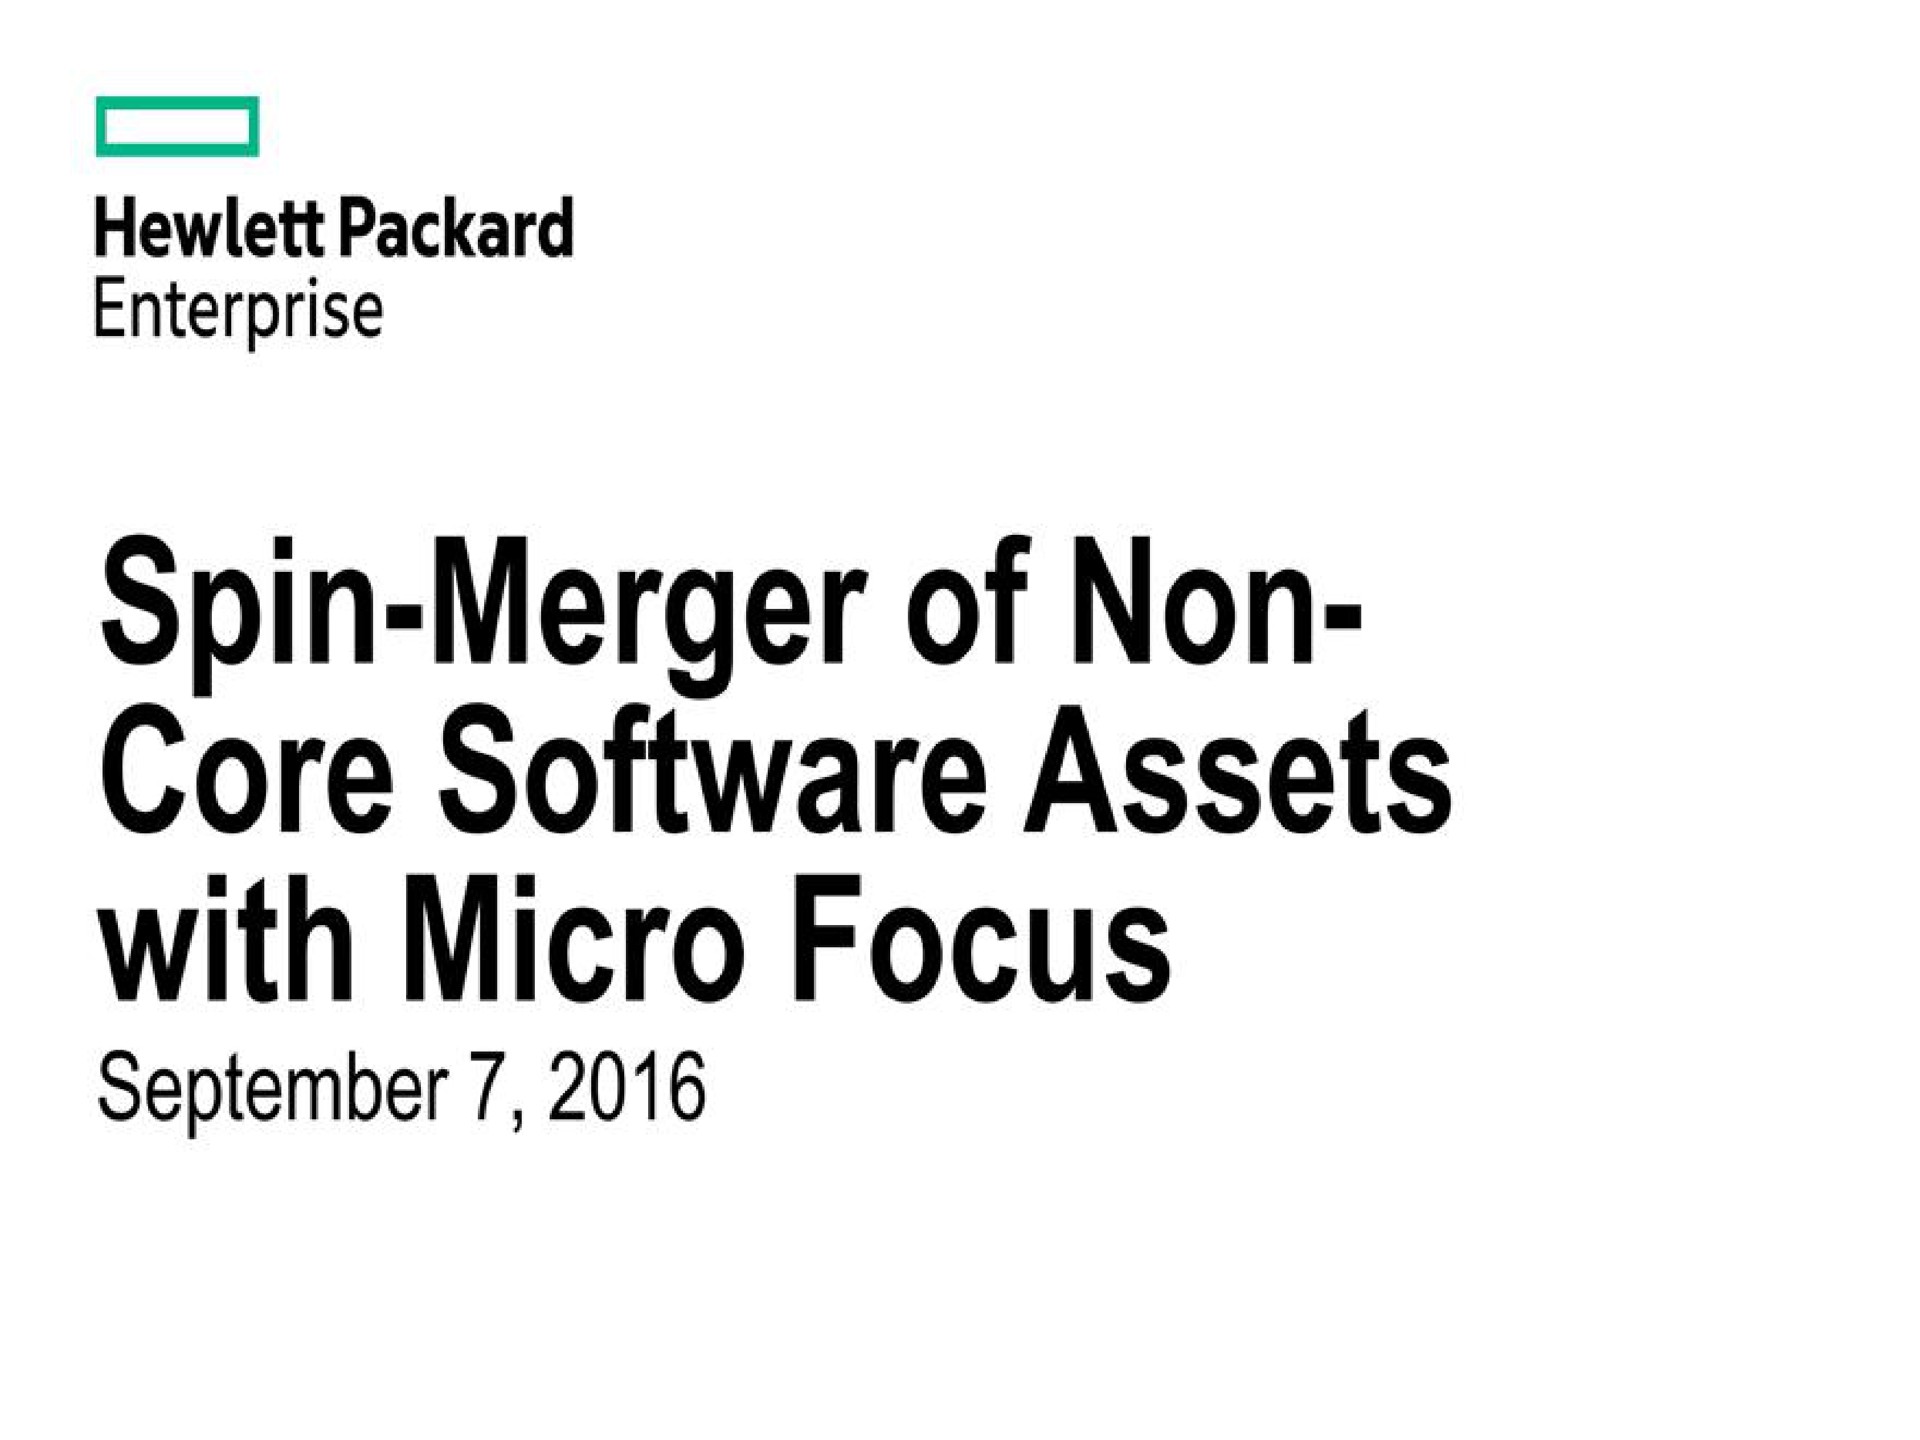 enterprise spin merger of non core assets with micro focus | Hewlett Packard Enterprise